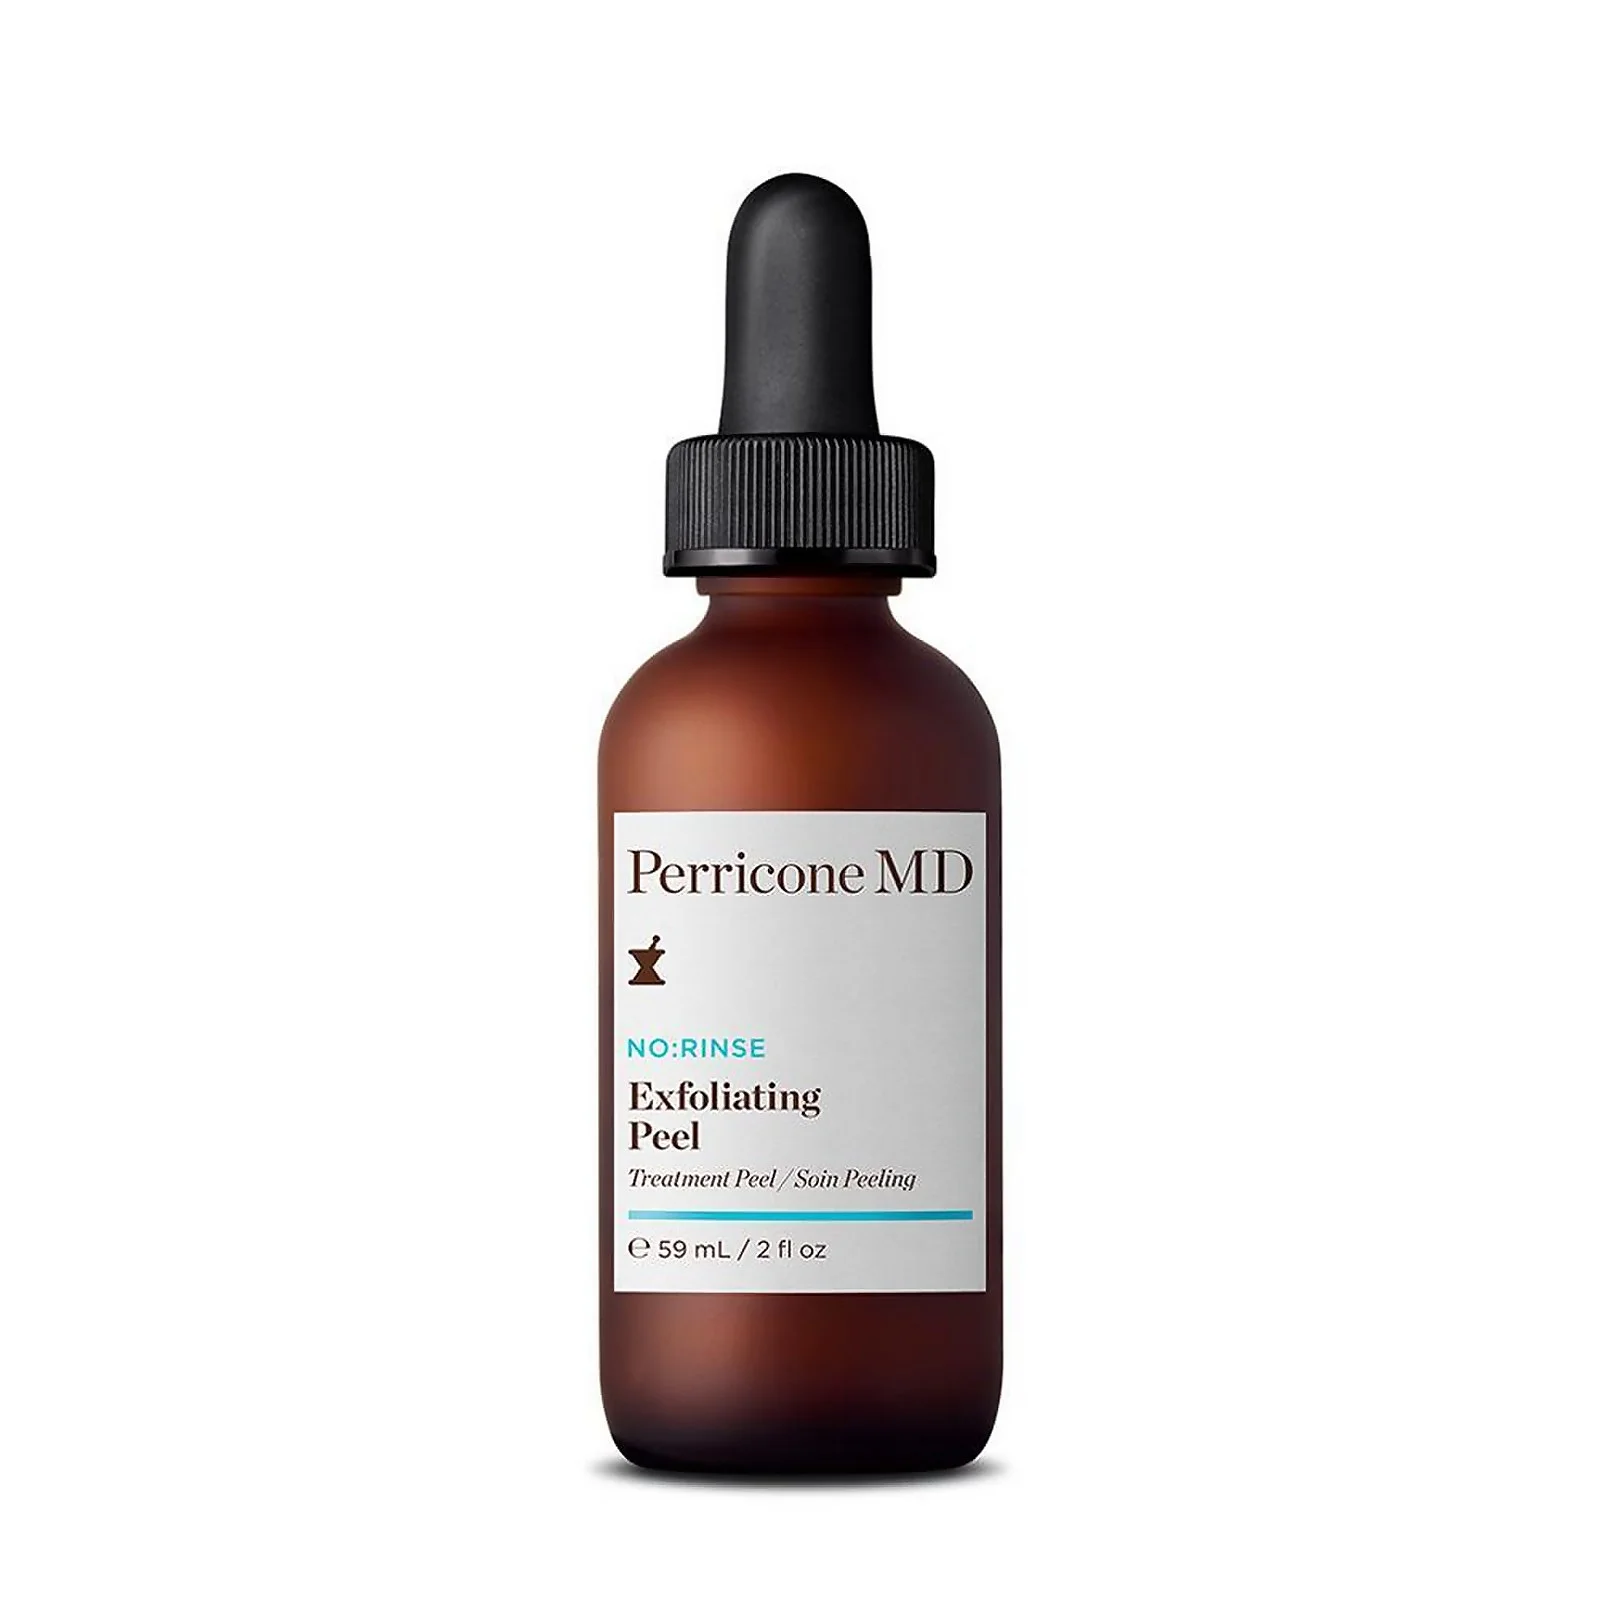 Perricone MD No:Rinse Exfoliating Peel Image 1